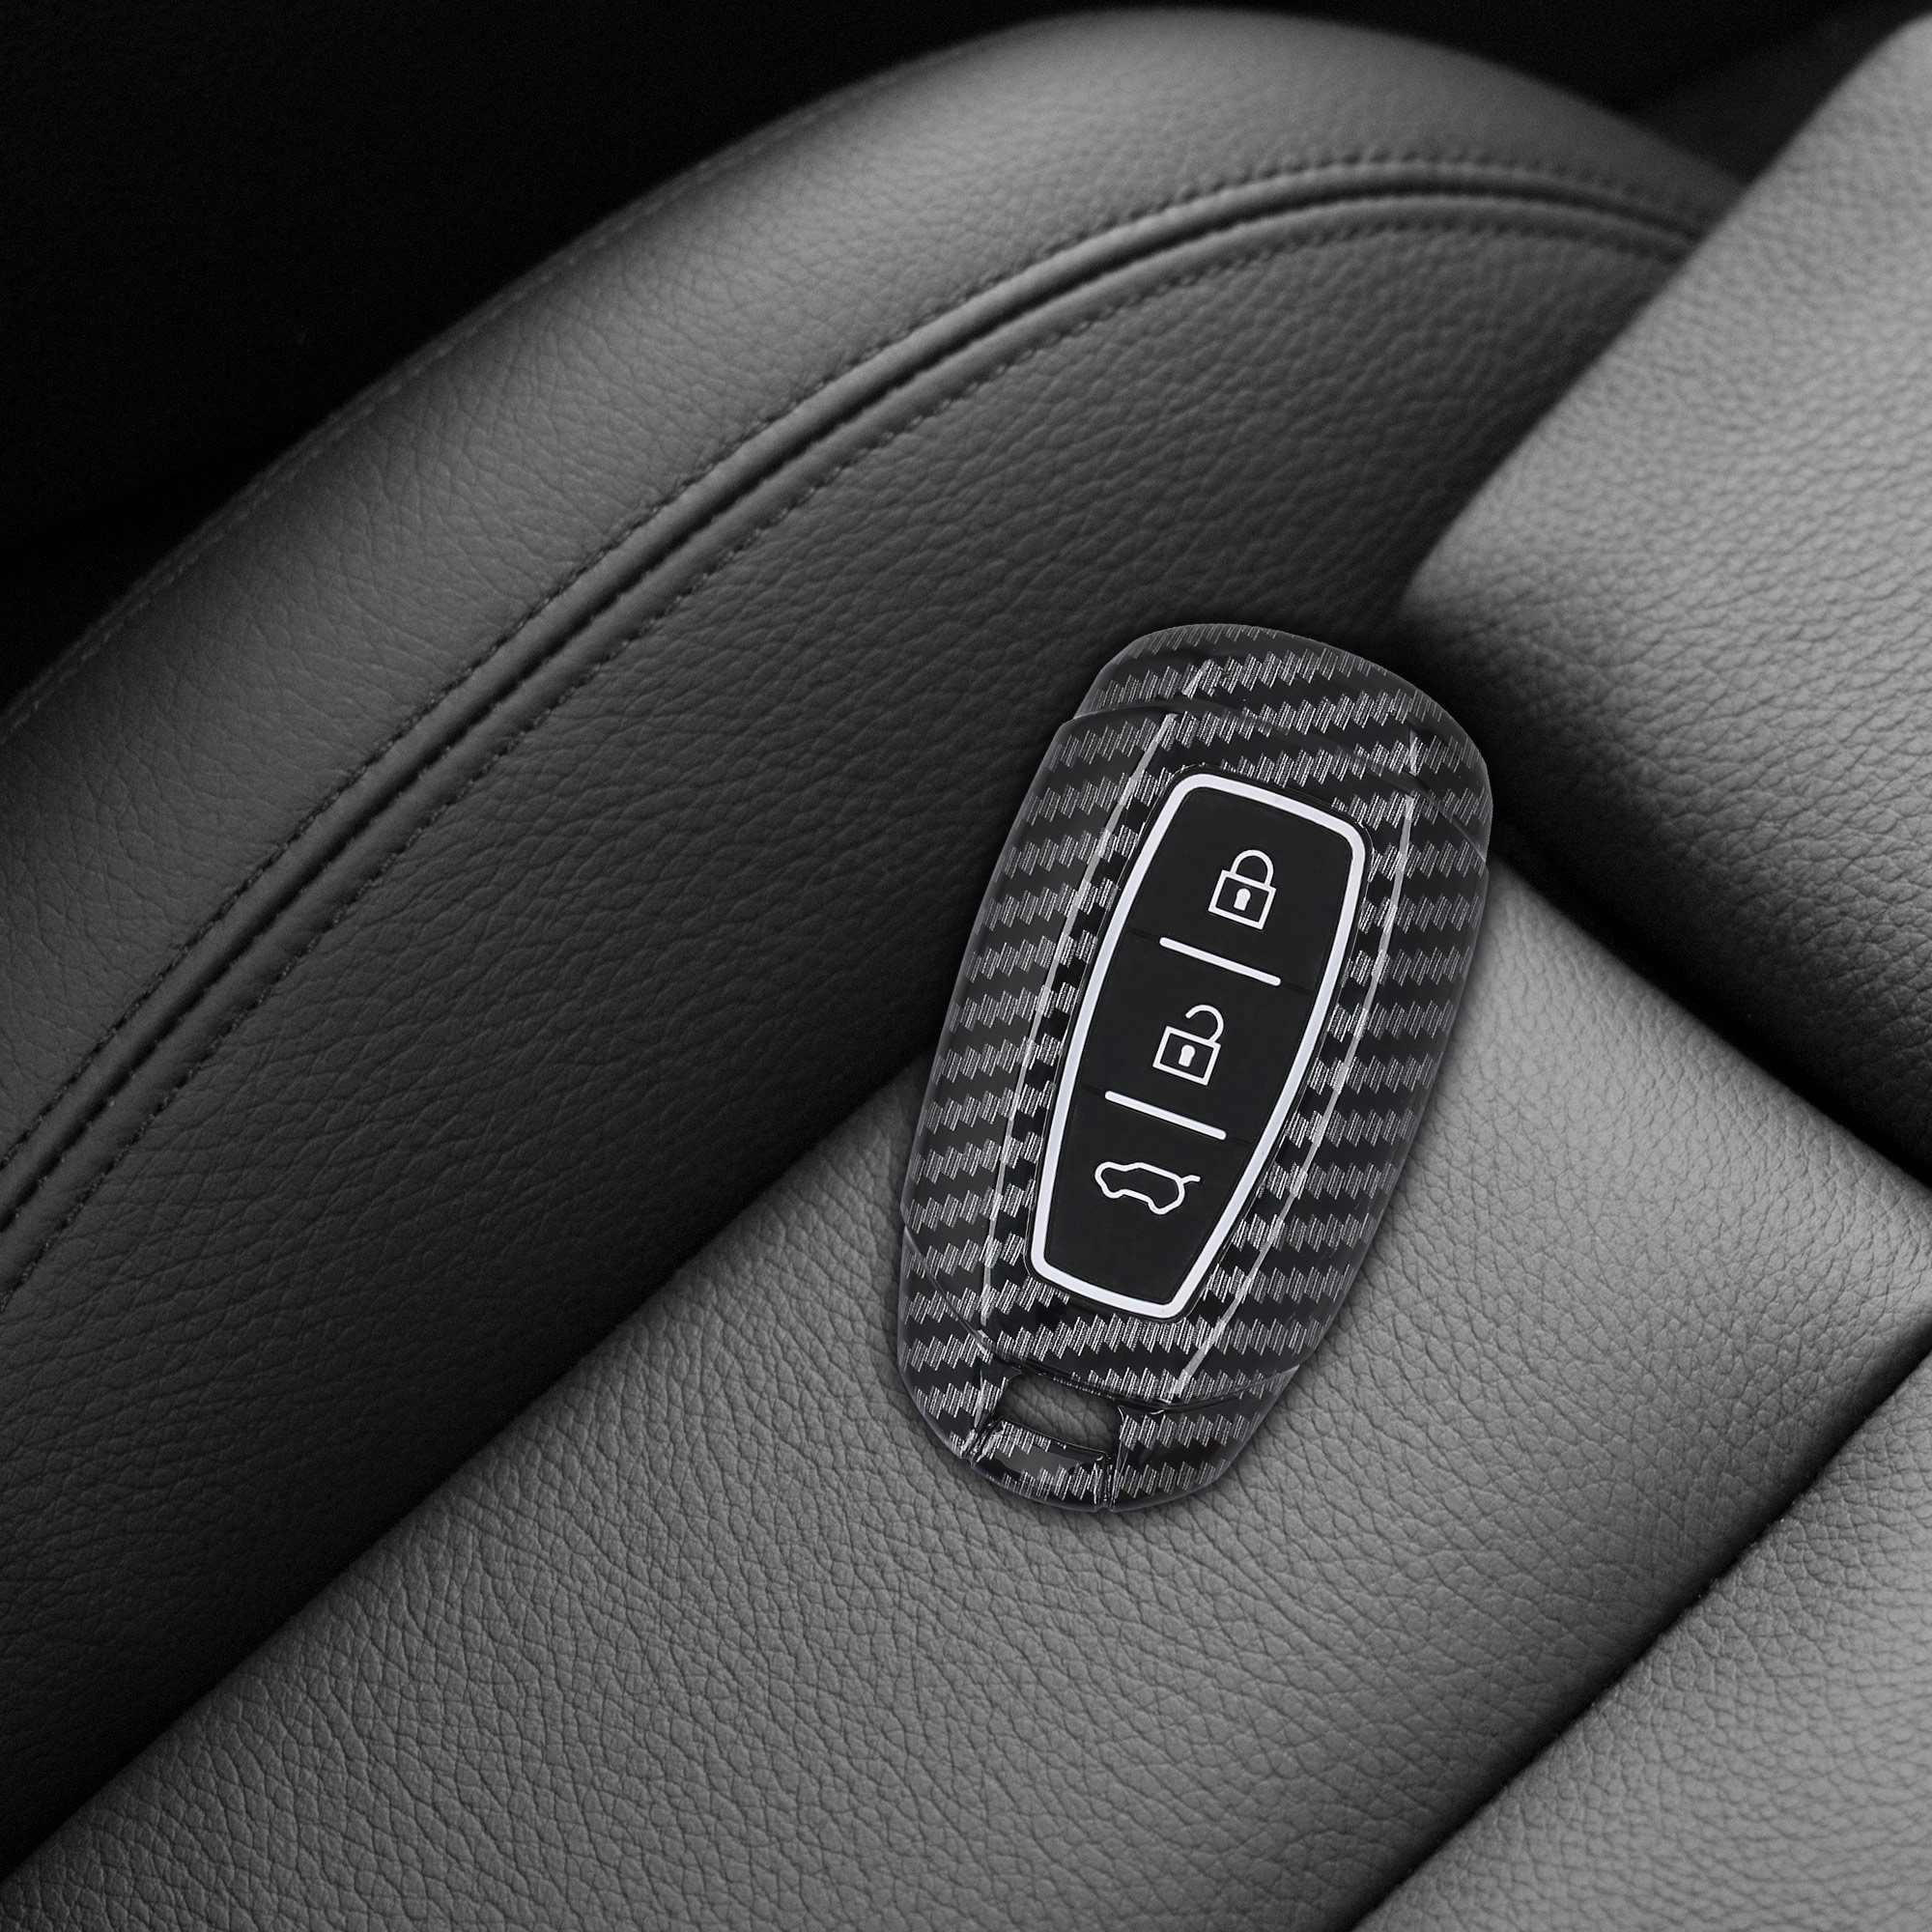 kwmobile Etui, Autoschlüssel Hülle für Opel Chevrolet - Silikon Schutzhülle  Schlüsselhülle Cover für Opel Chevrolet 2-Tasten Klapp Autoschlüssel Carbon  Design